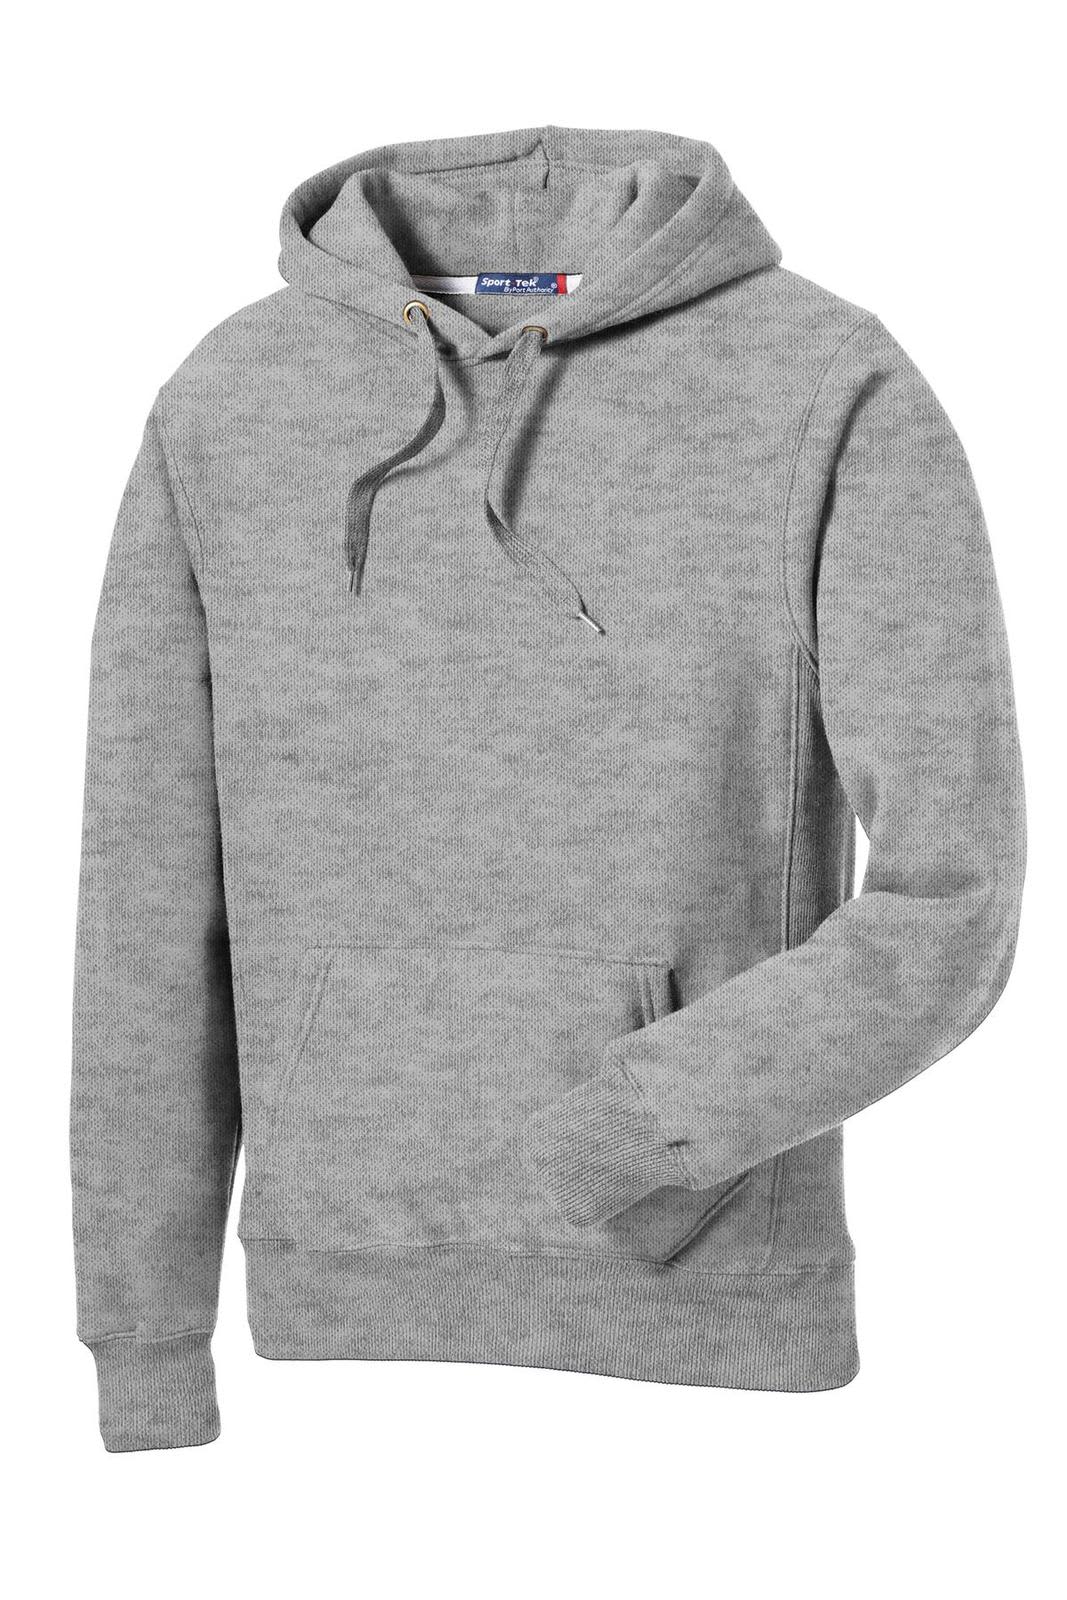 Sport-Tek Super Heavyweight Pullover Hooded Sweatshirt | The Branding ...